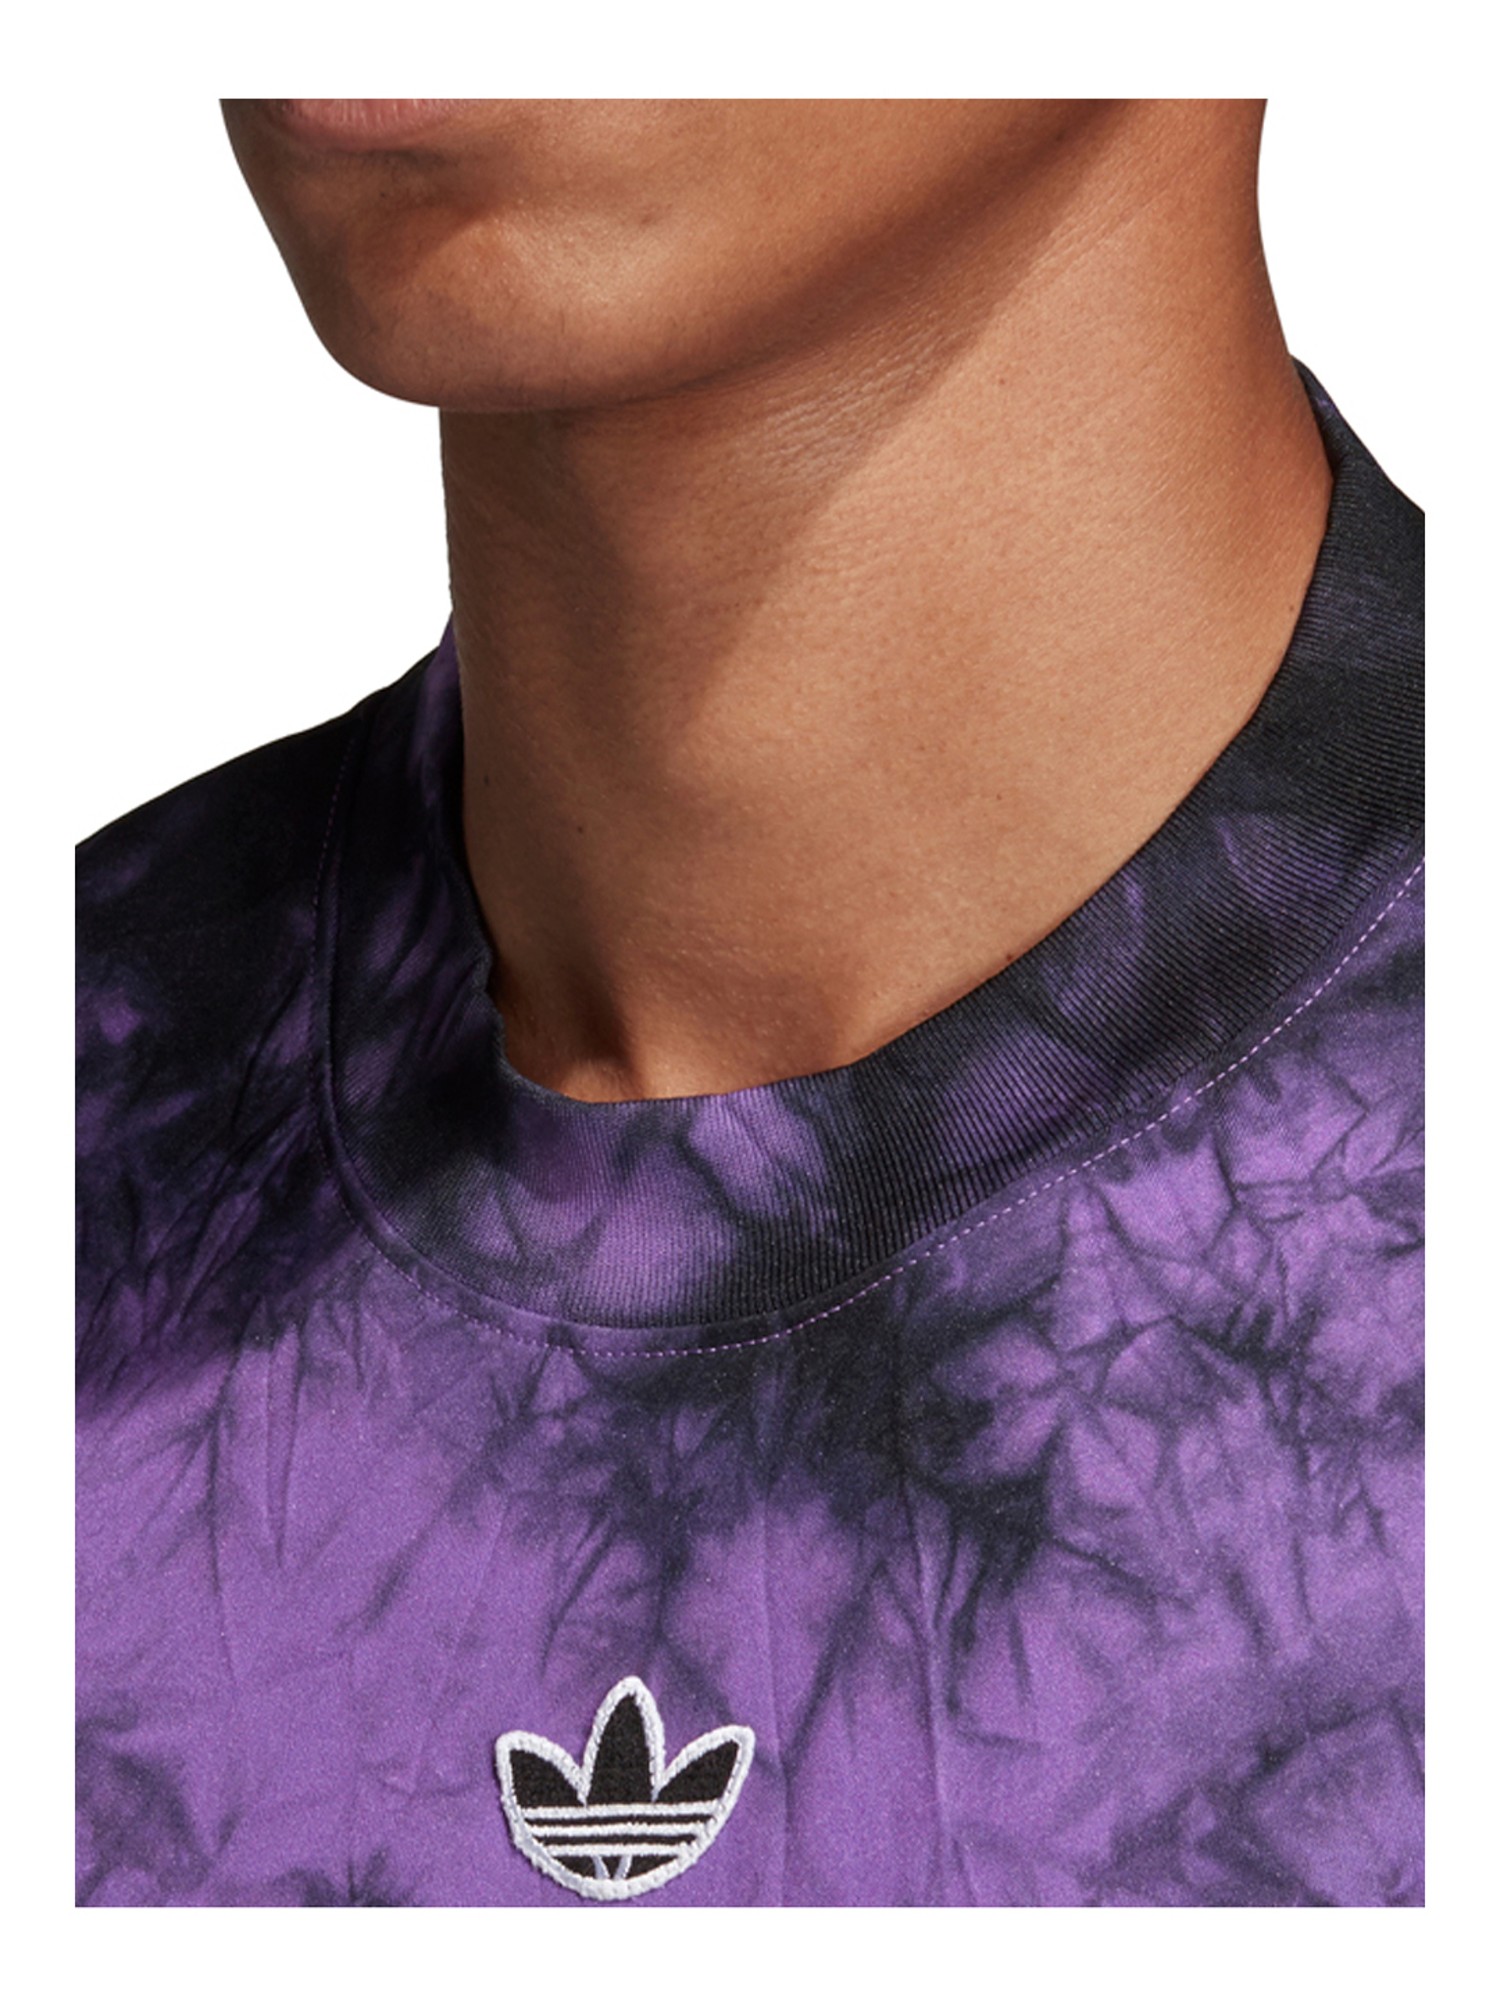 Buy Adidas Originals Purple Regular Fit Printed Sports T-Shirt for Mens  Online @ Tata CLiQ